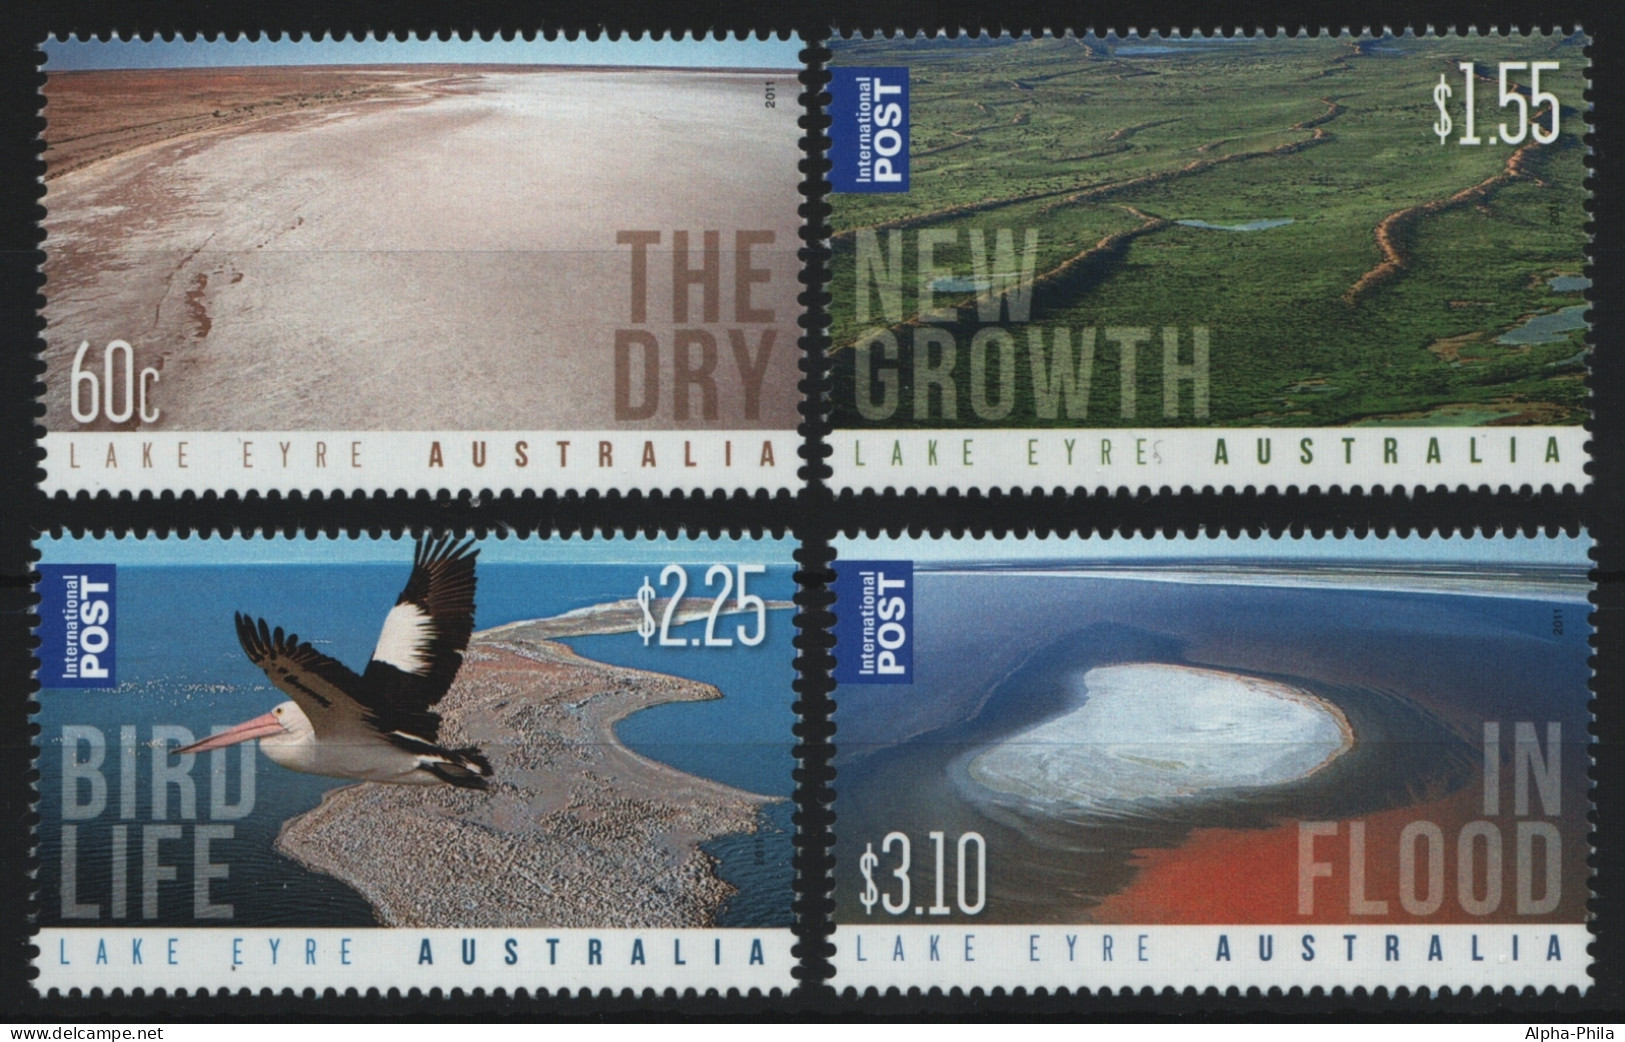 Australien 2011 - Mi-Nr. 3550-3553 ** - MNH - Natur - Lake Eyre - Mint Stamps